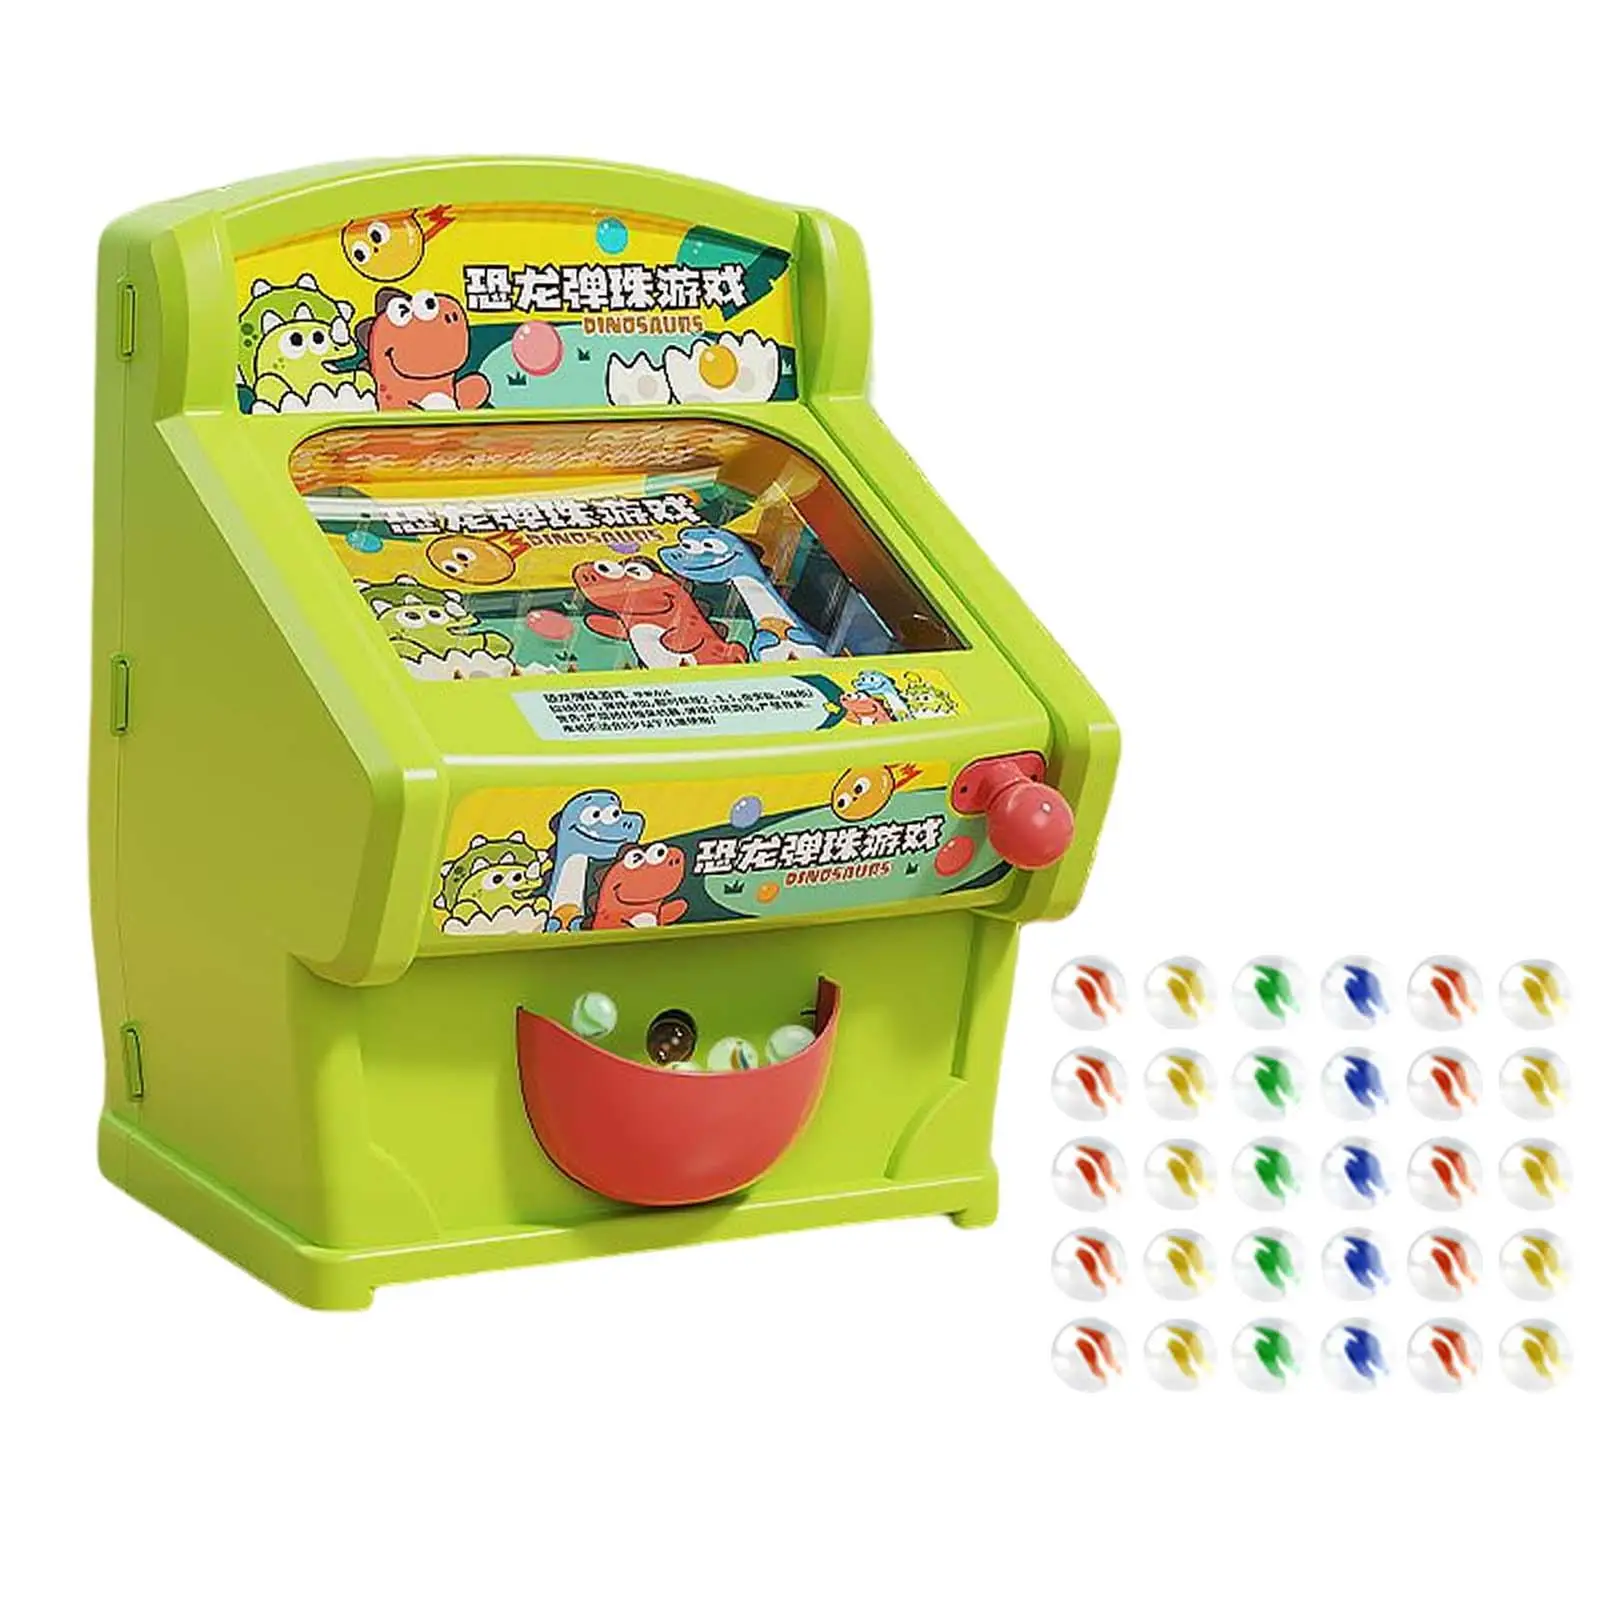 Dinosaur Marble Developmental Toy Table Games Kids Educational Toy Interactive Game for Boys Girls Preschool Kids